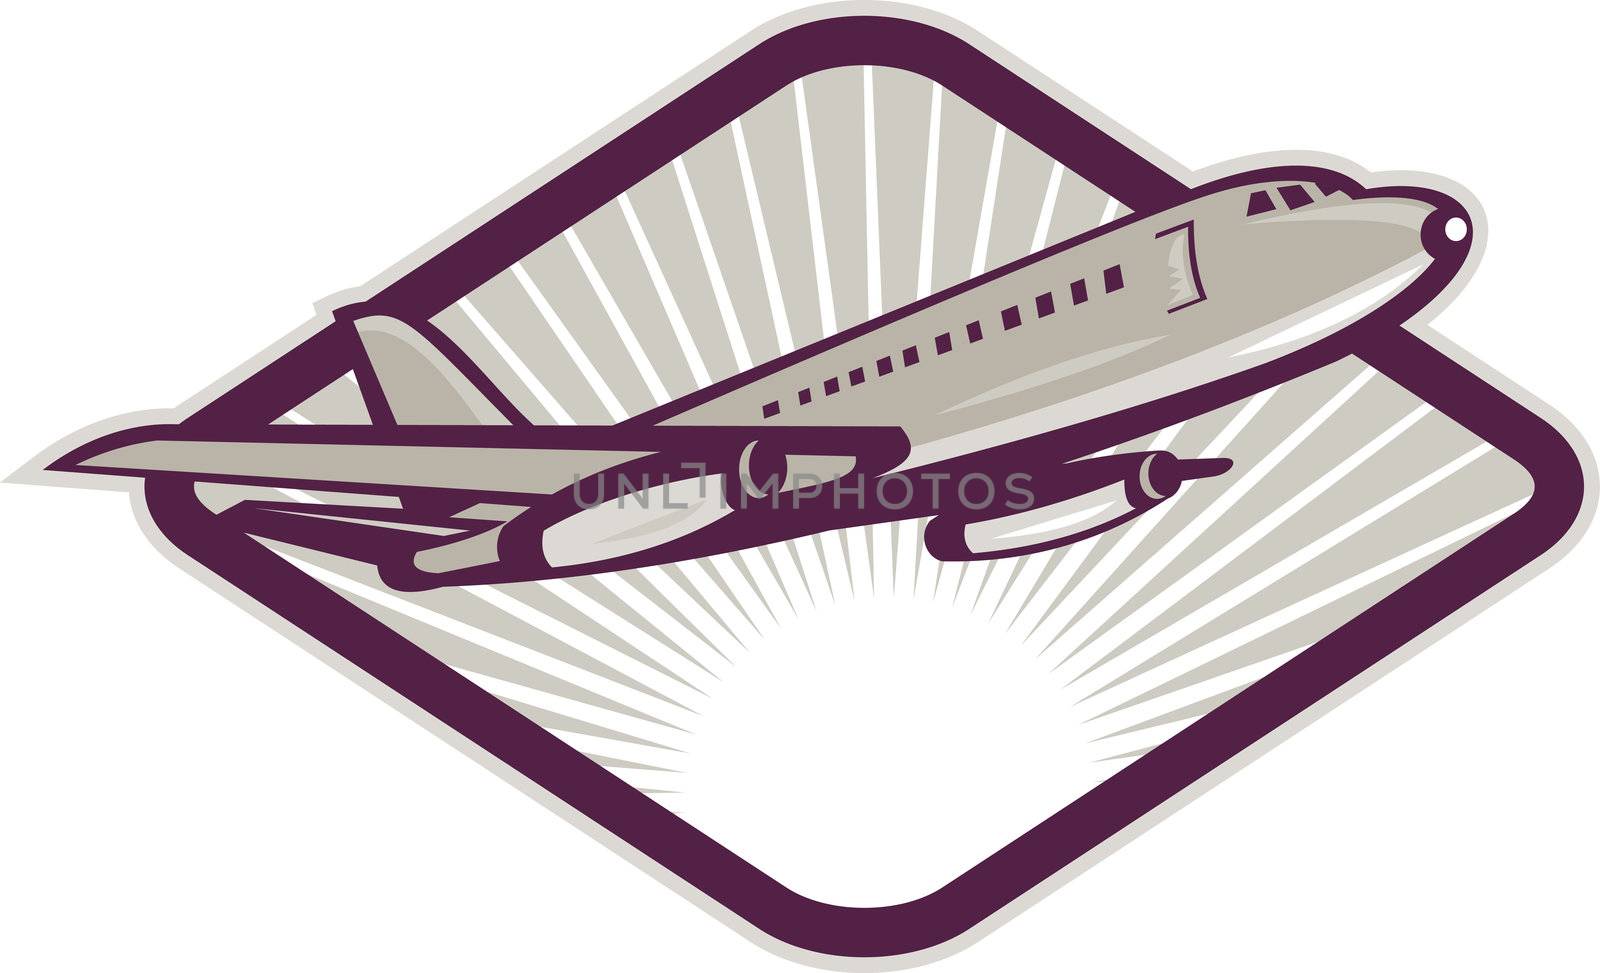 illustration of a Jumbo jet airliner taking off set inside a diamond